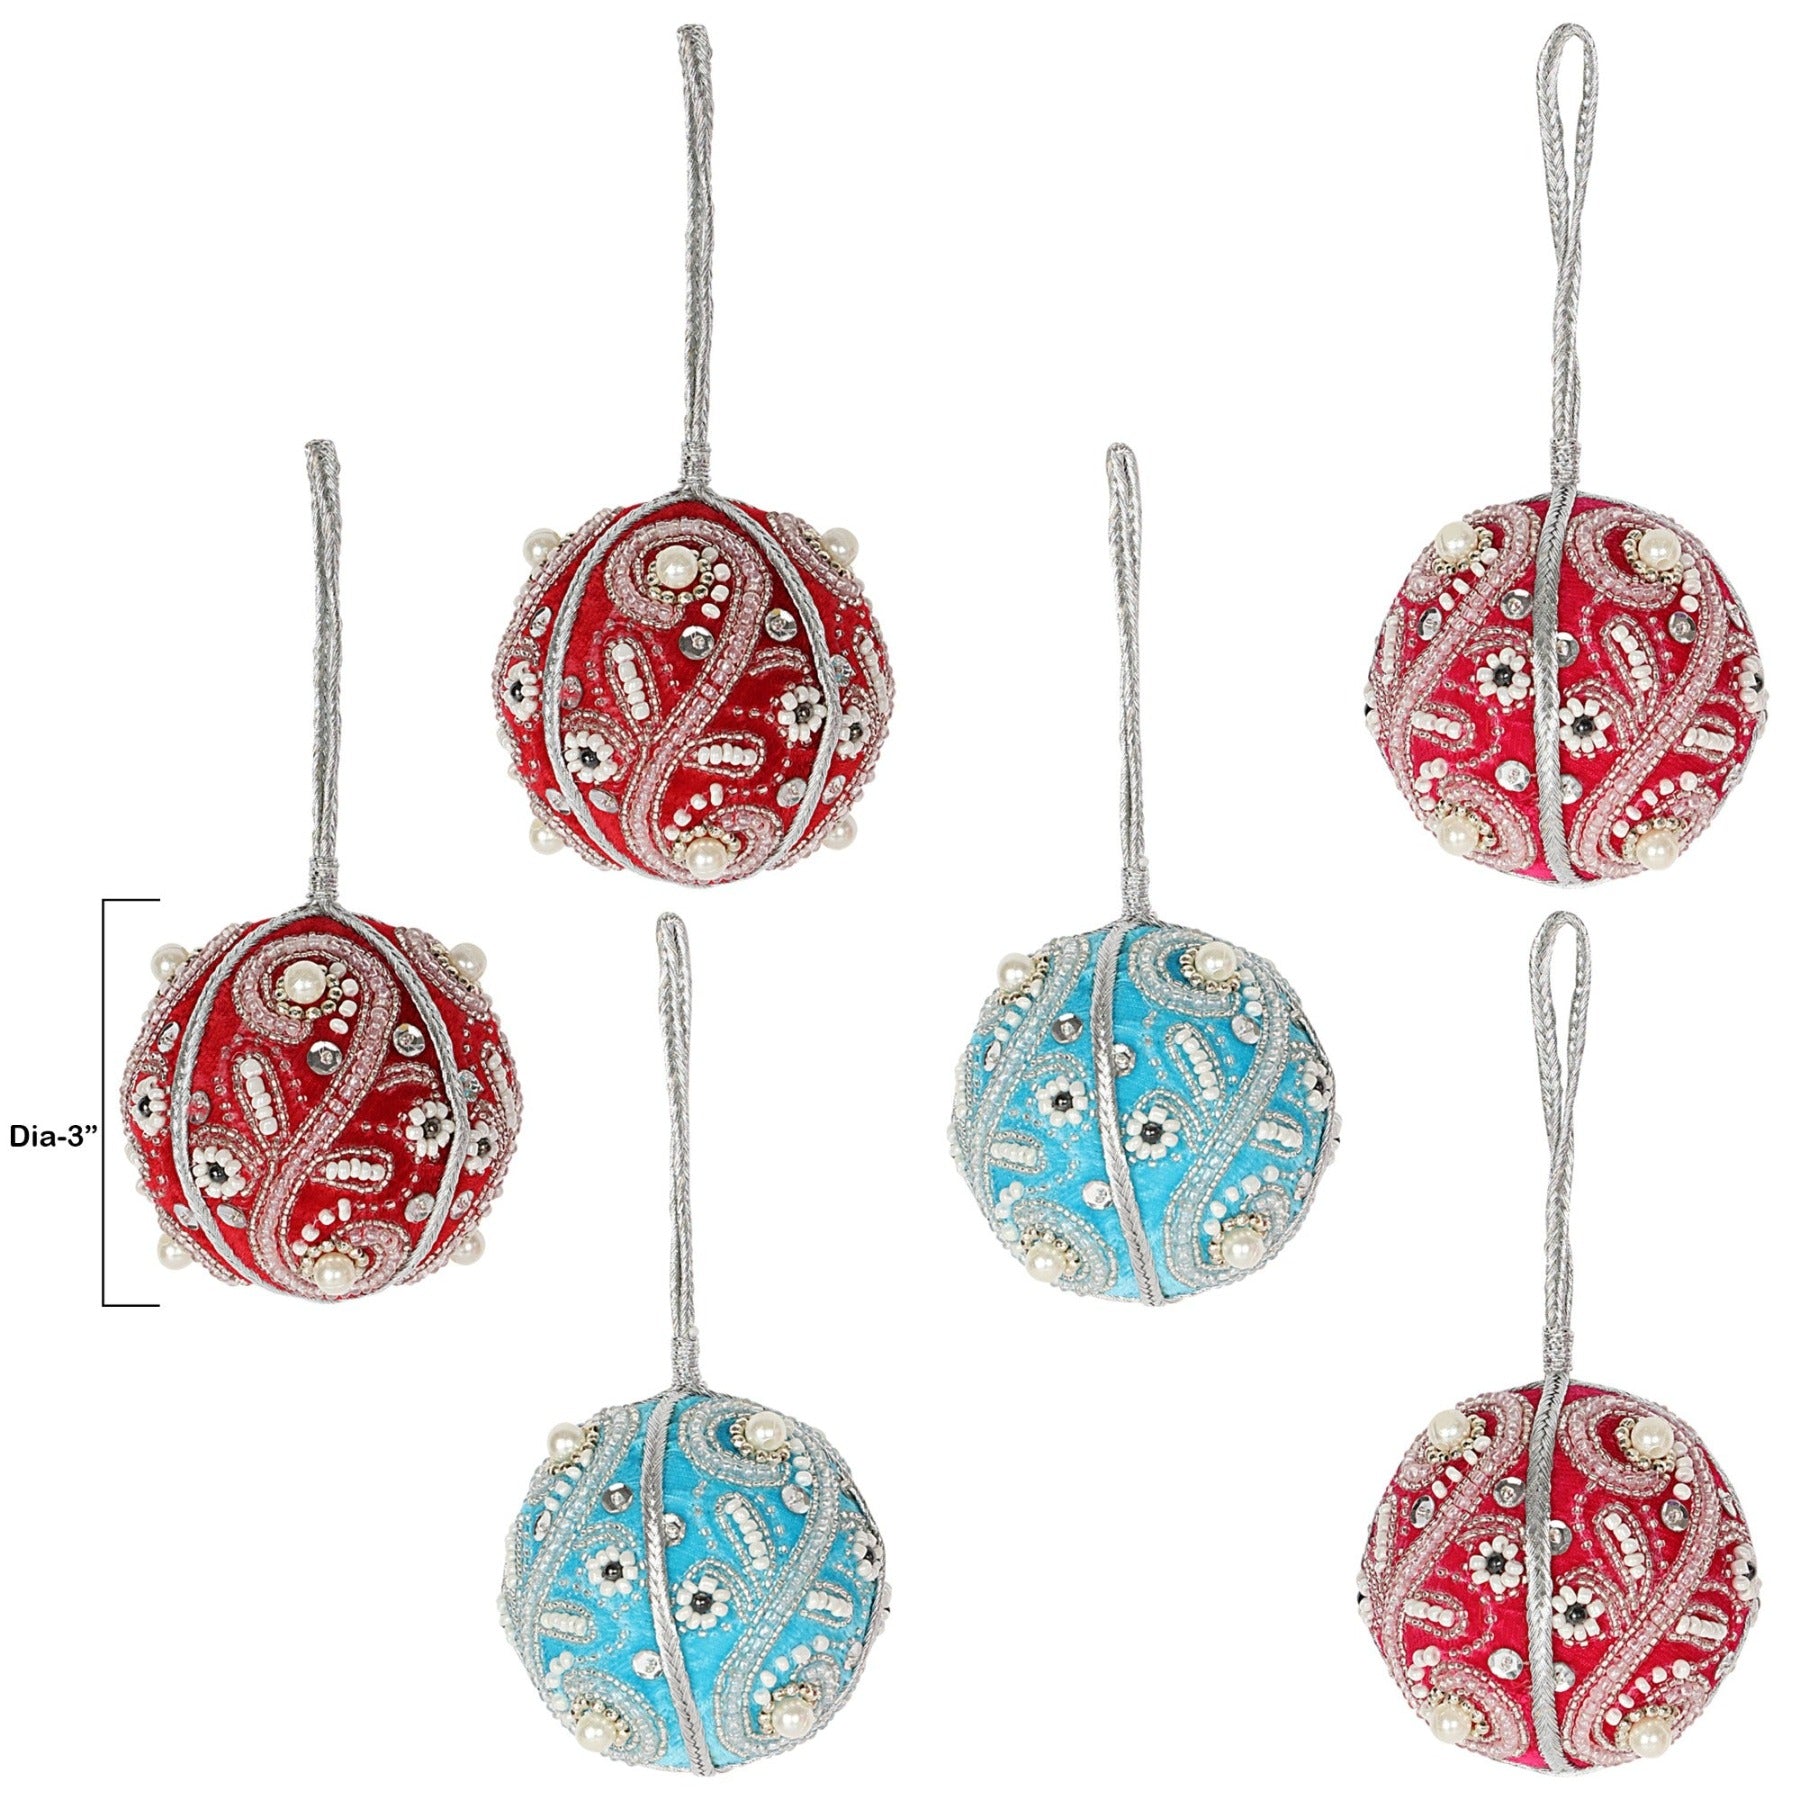 Decorative Pearls christmas balls ornaments set 0f 6 - Multicolor christmas balls tree ornaments for holiday decor (1SET=6PCS)